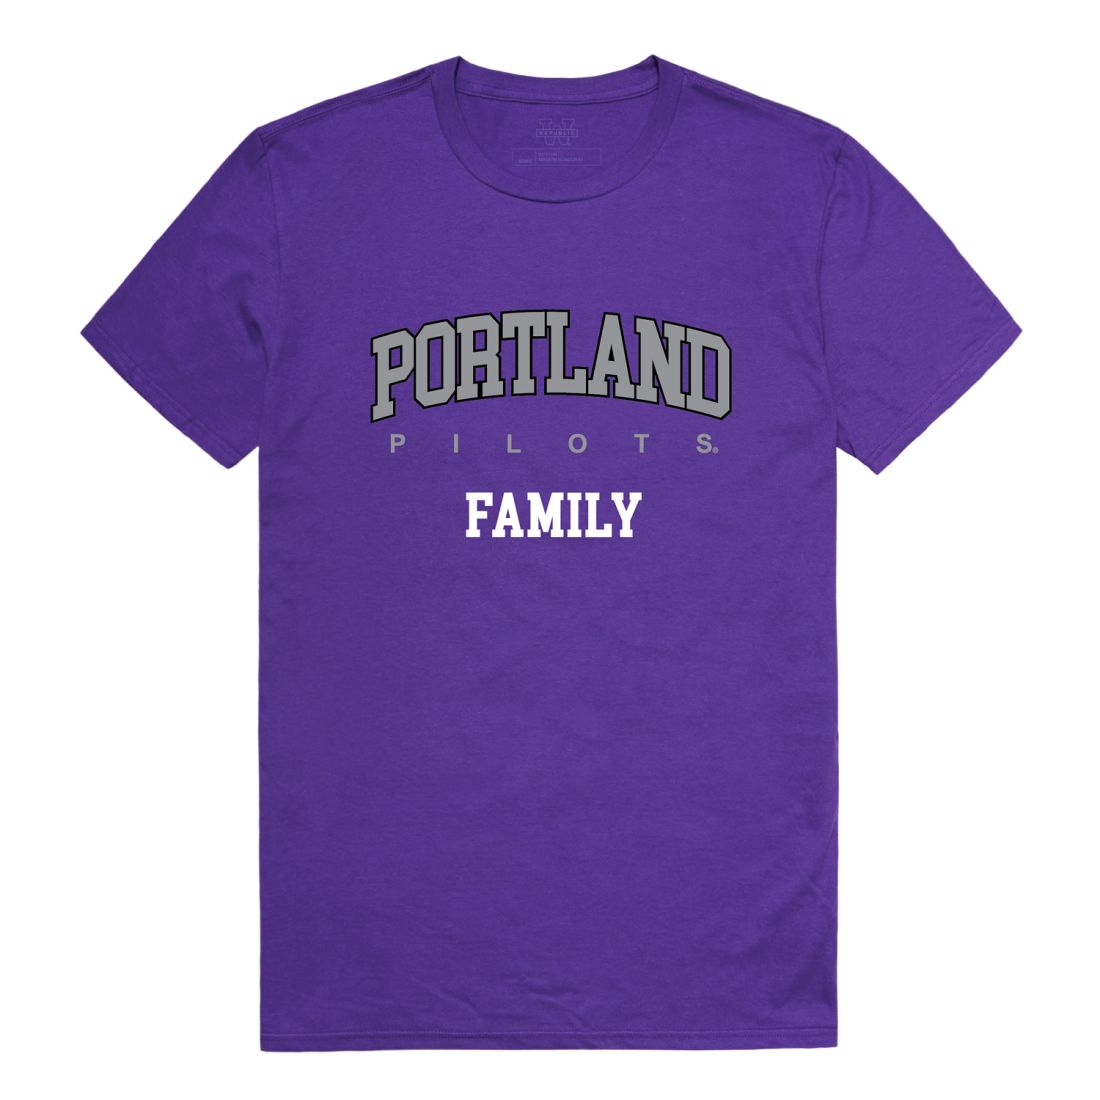 UP University of Portland Pilots Family T-Shirt